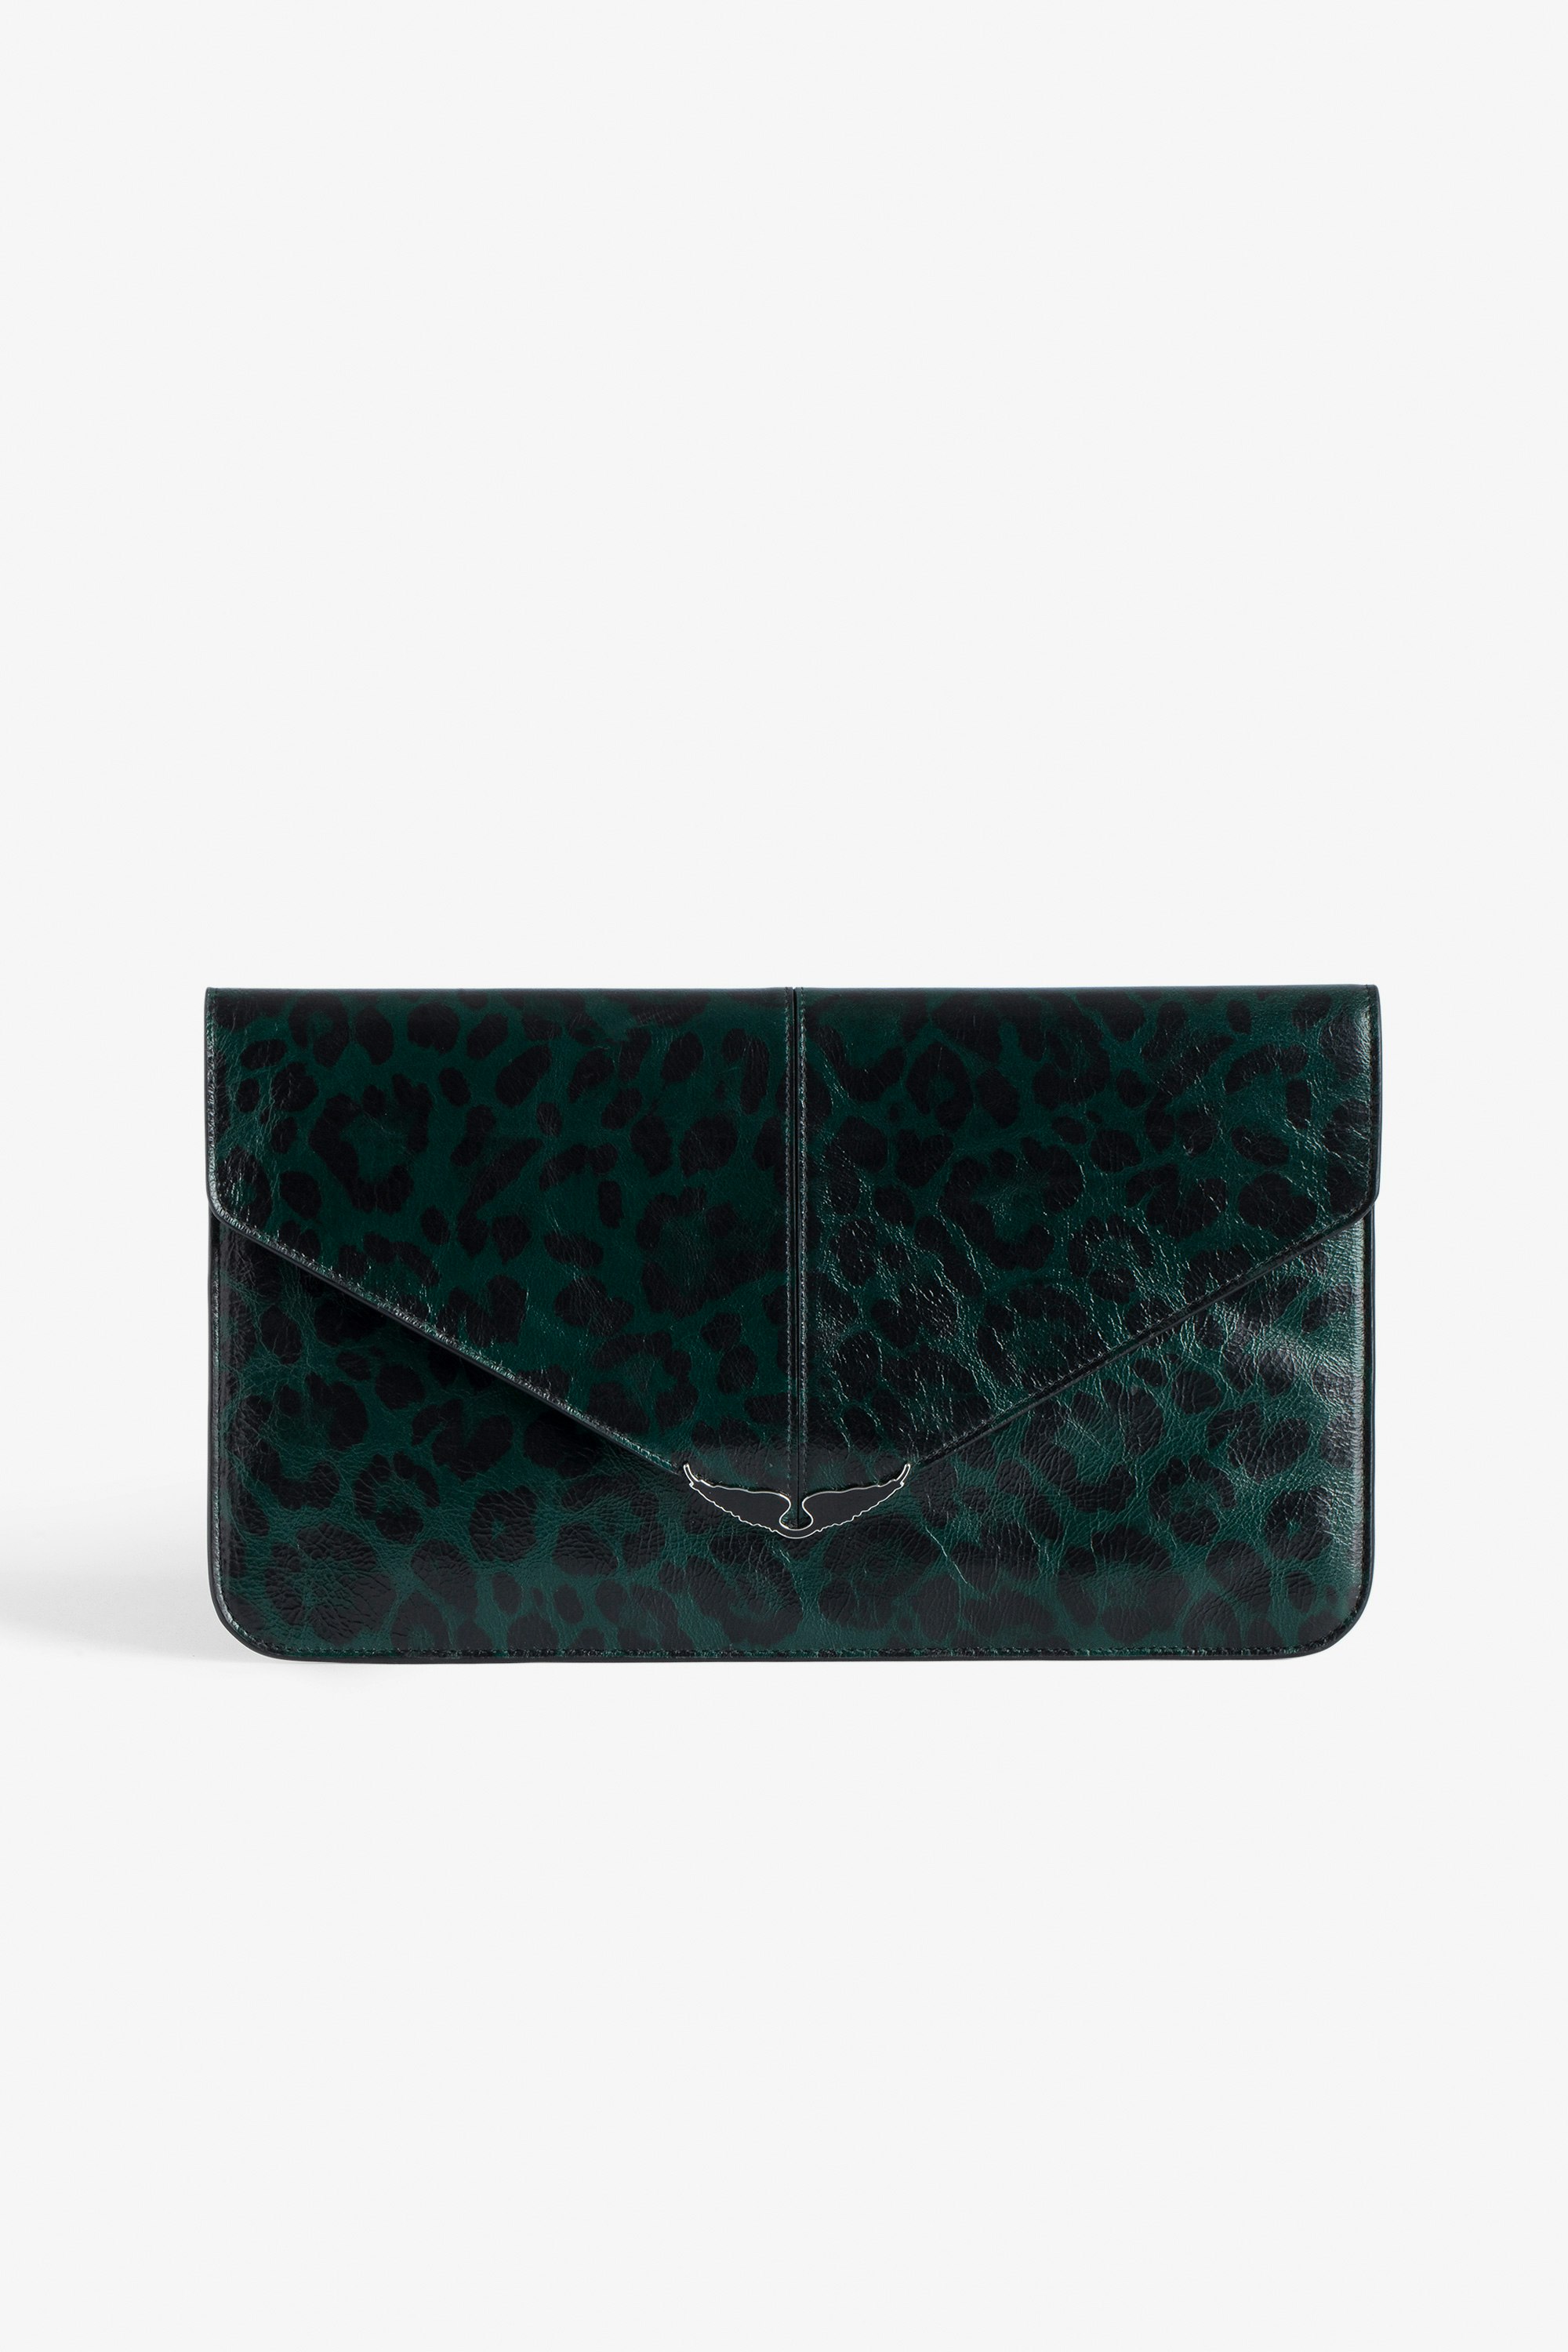 Borderline Leopard Clutch Women’s green leopard-print patent leather envelope clutch with wings charm.